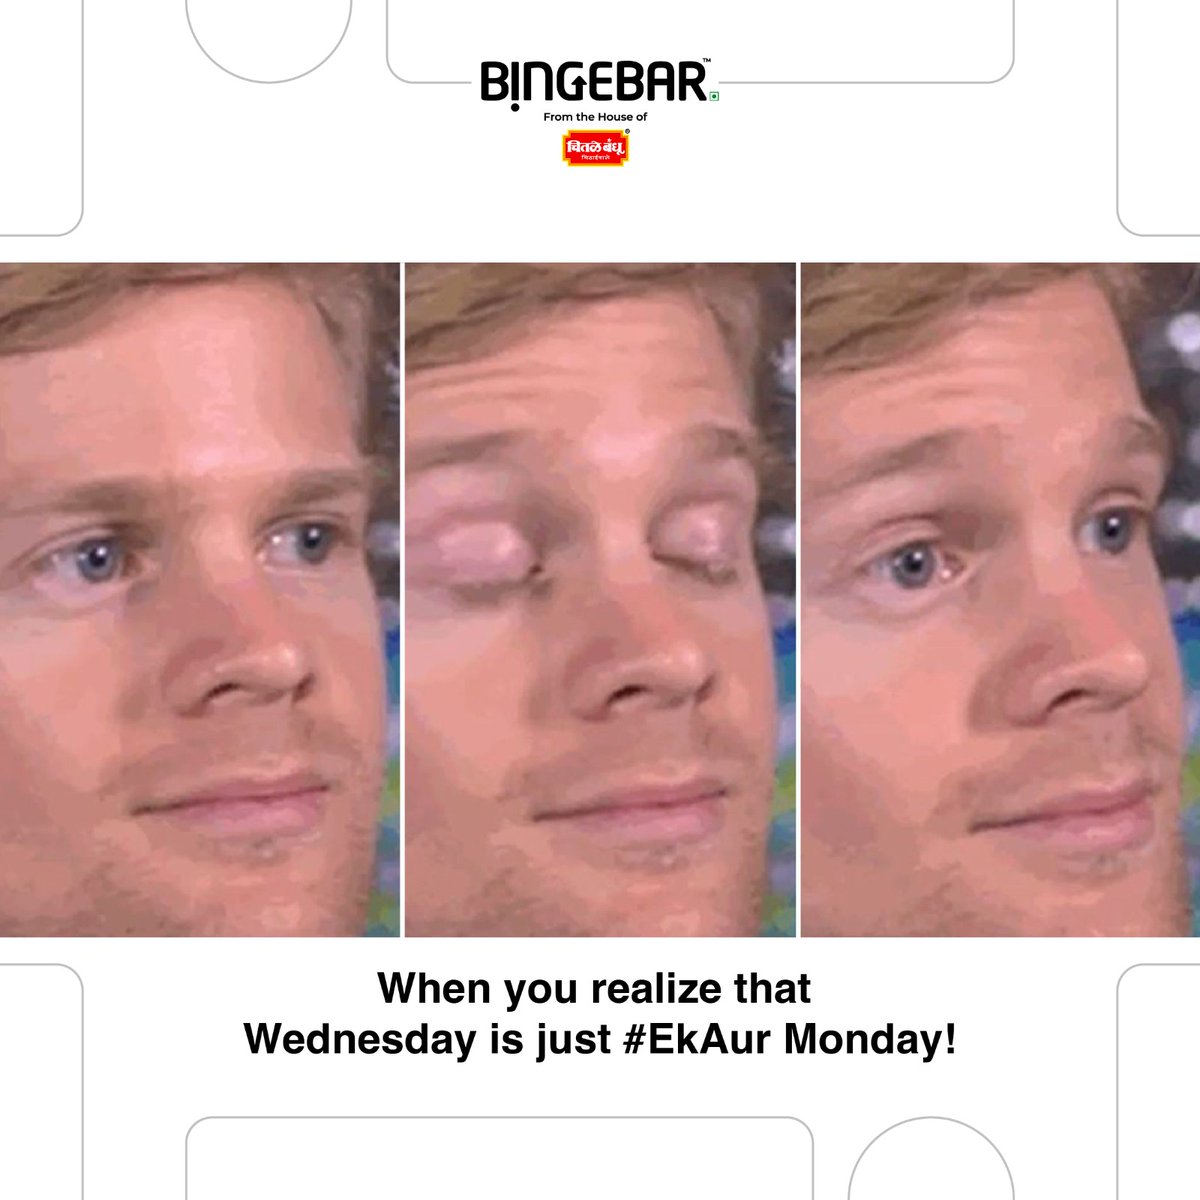 A truth that is hard to digest without Bingebars. Order your #EkAur today! 🤘

#Bingebar #WednesdayMeme #MemesDaily #MemeContent #BingeOn #BingeBar #ChitaleBandhuMithaiwale